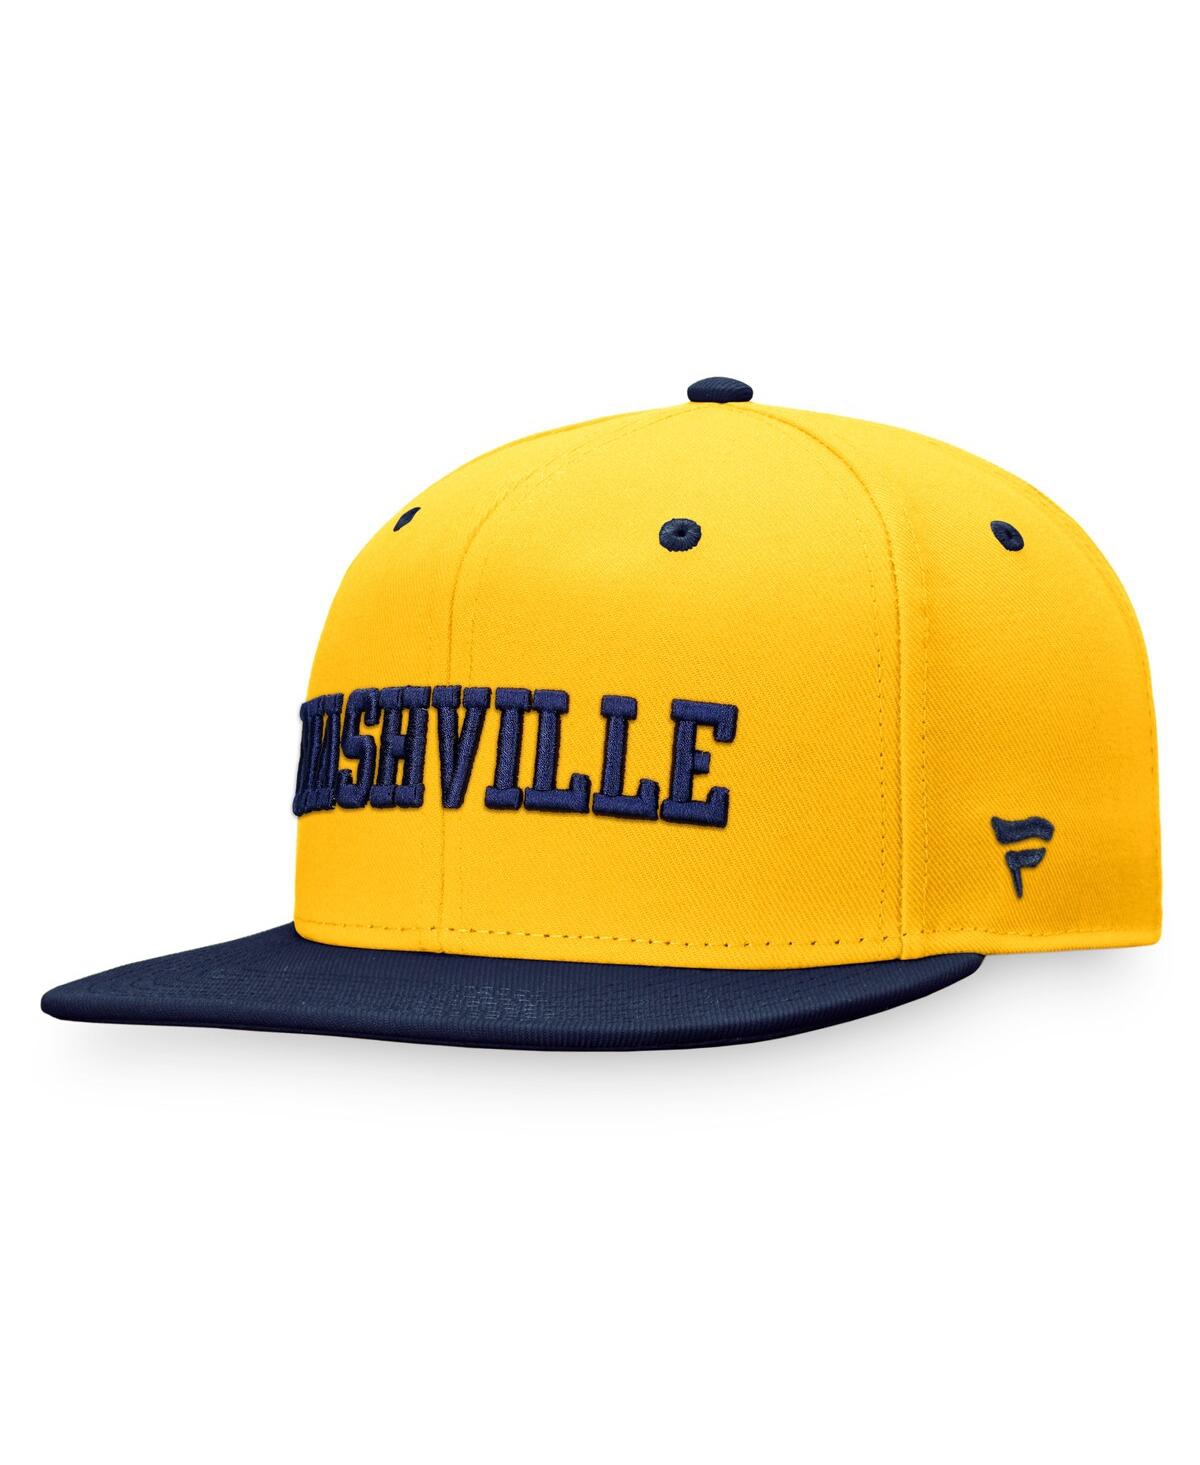 Nashville Predators Fanatics Branded Special Edition Adjustable Hat - Gold